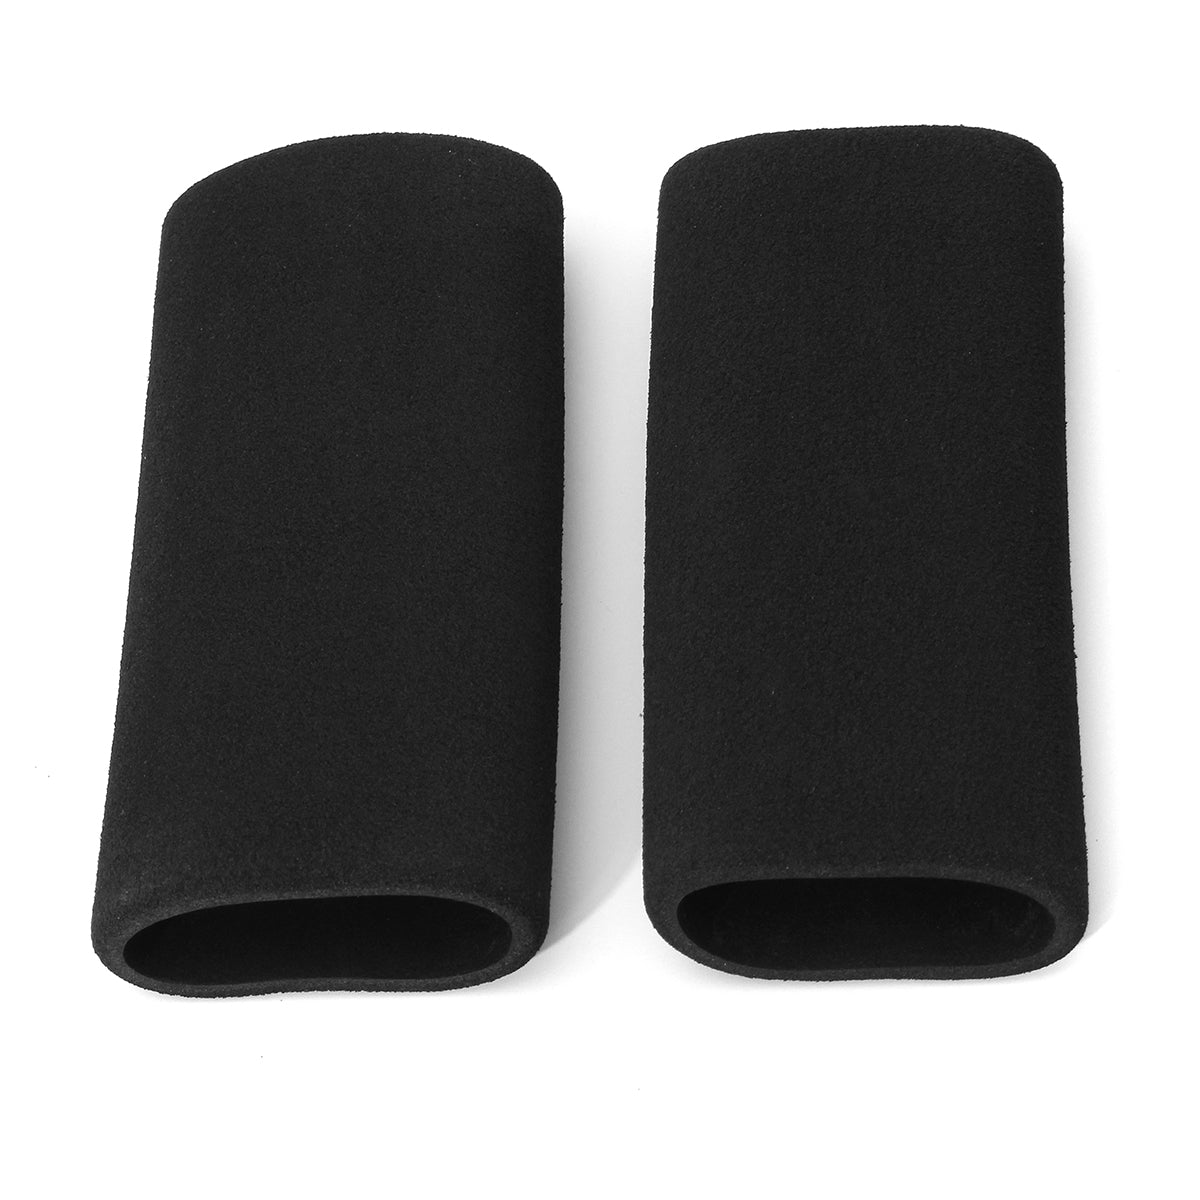 Black Motorcycle Foam Handlebar Grip Slip-on Anti Vibration Comfort Cover Black